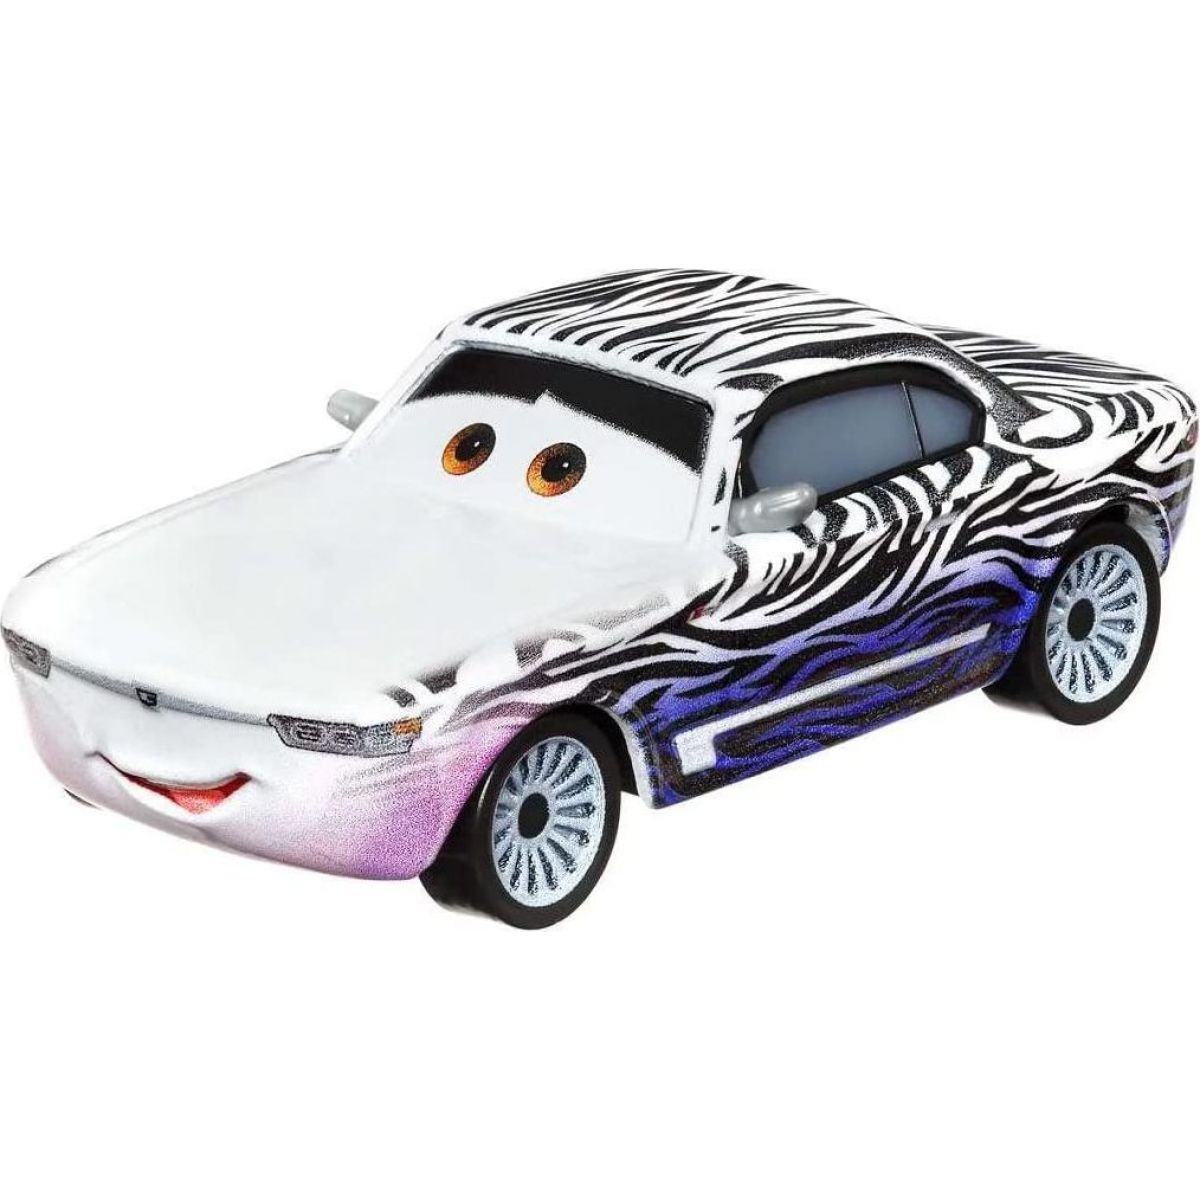 Mattel Disney Cars auto single Khy Pillar